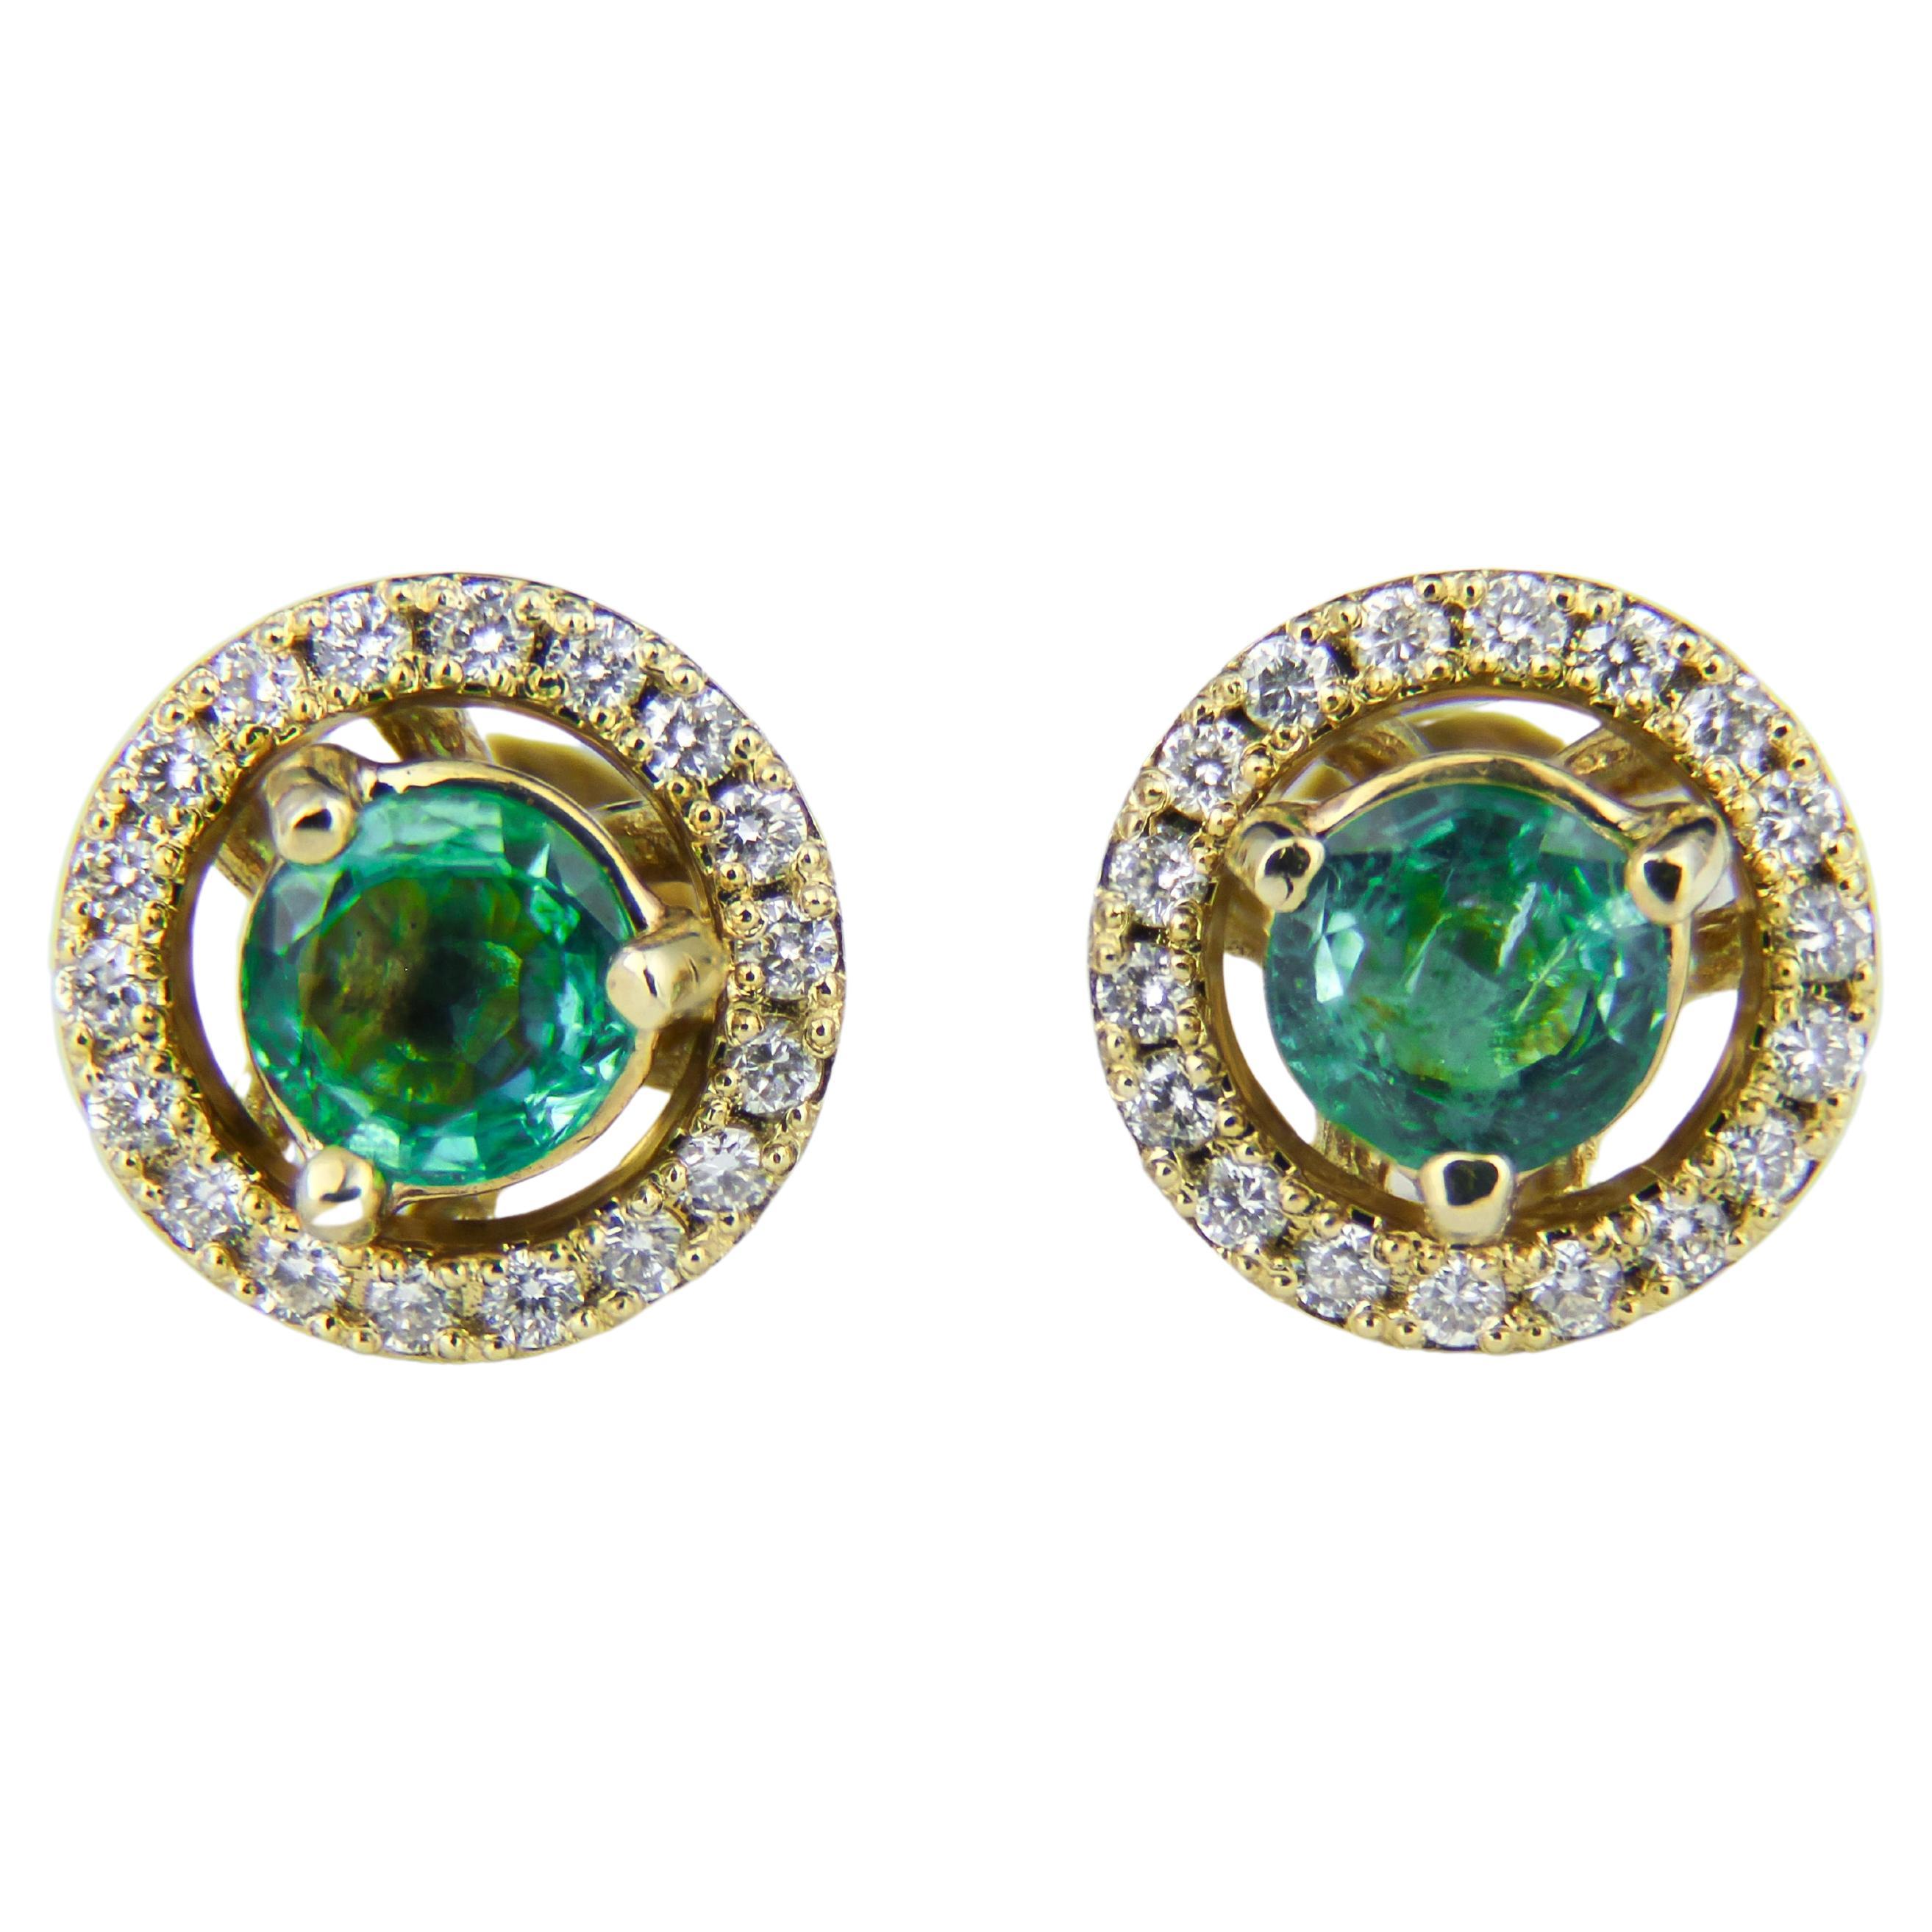 Emeralds 14k gold earrings studs.